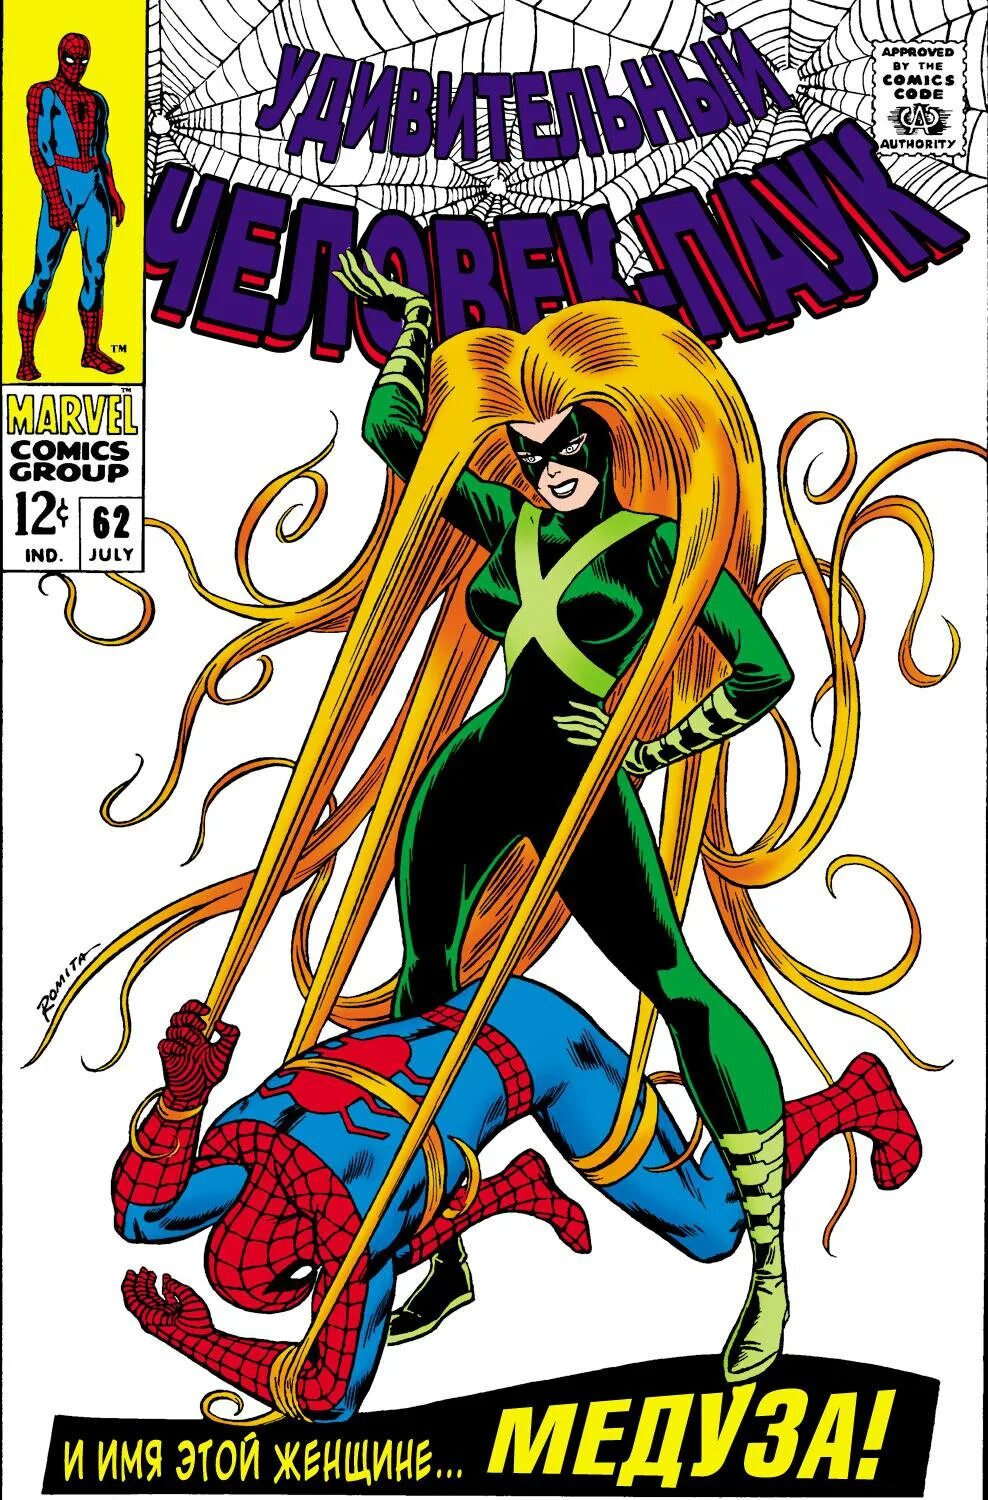 Spider man 62 комикс. Amazing Spider-man John Romita SR.. The amazing Spider-man #62 & #63 variant Covers by Dustin Weaver. Читать комиксы удивительный